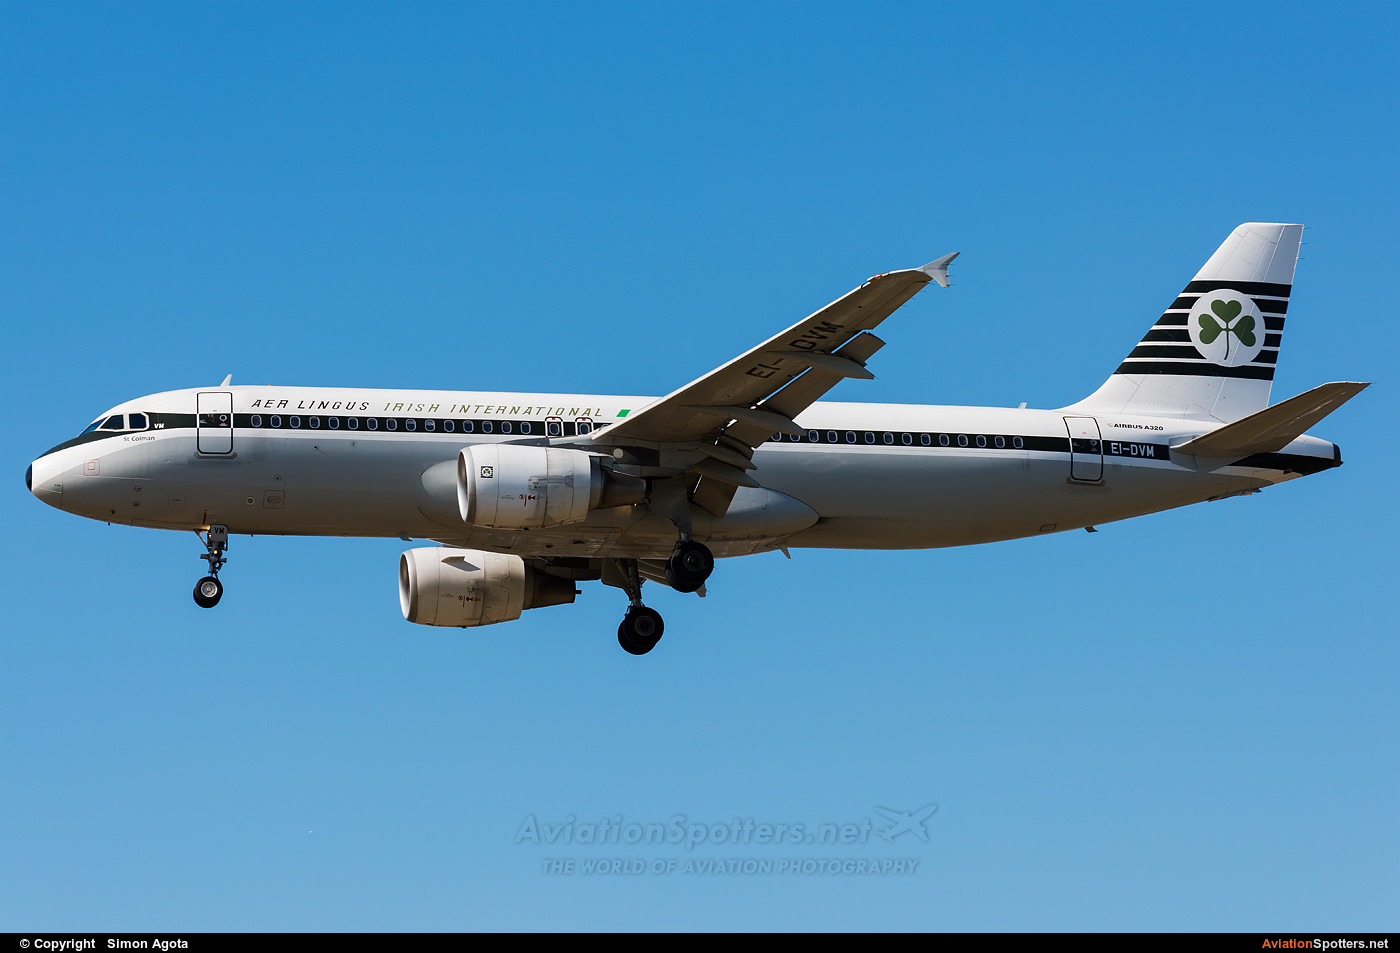 Aer Lingus  -  A320-214  (EI-DVM) By Simon Agota (goti80)